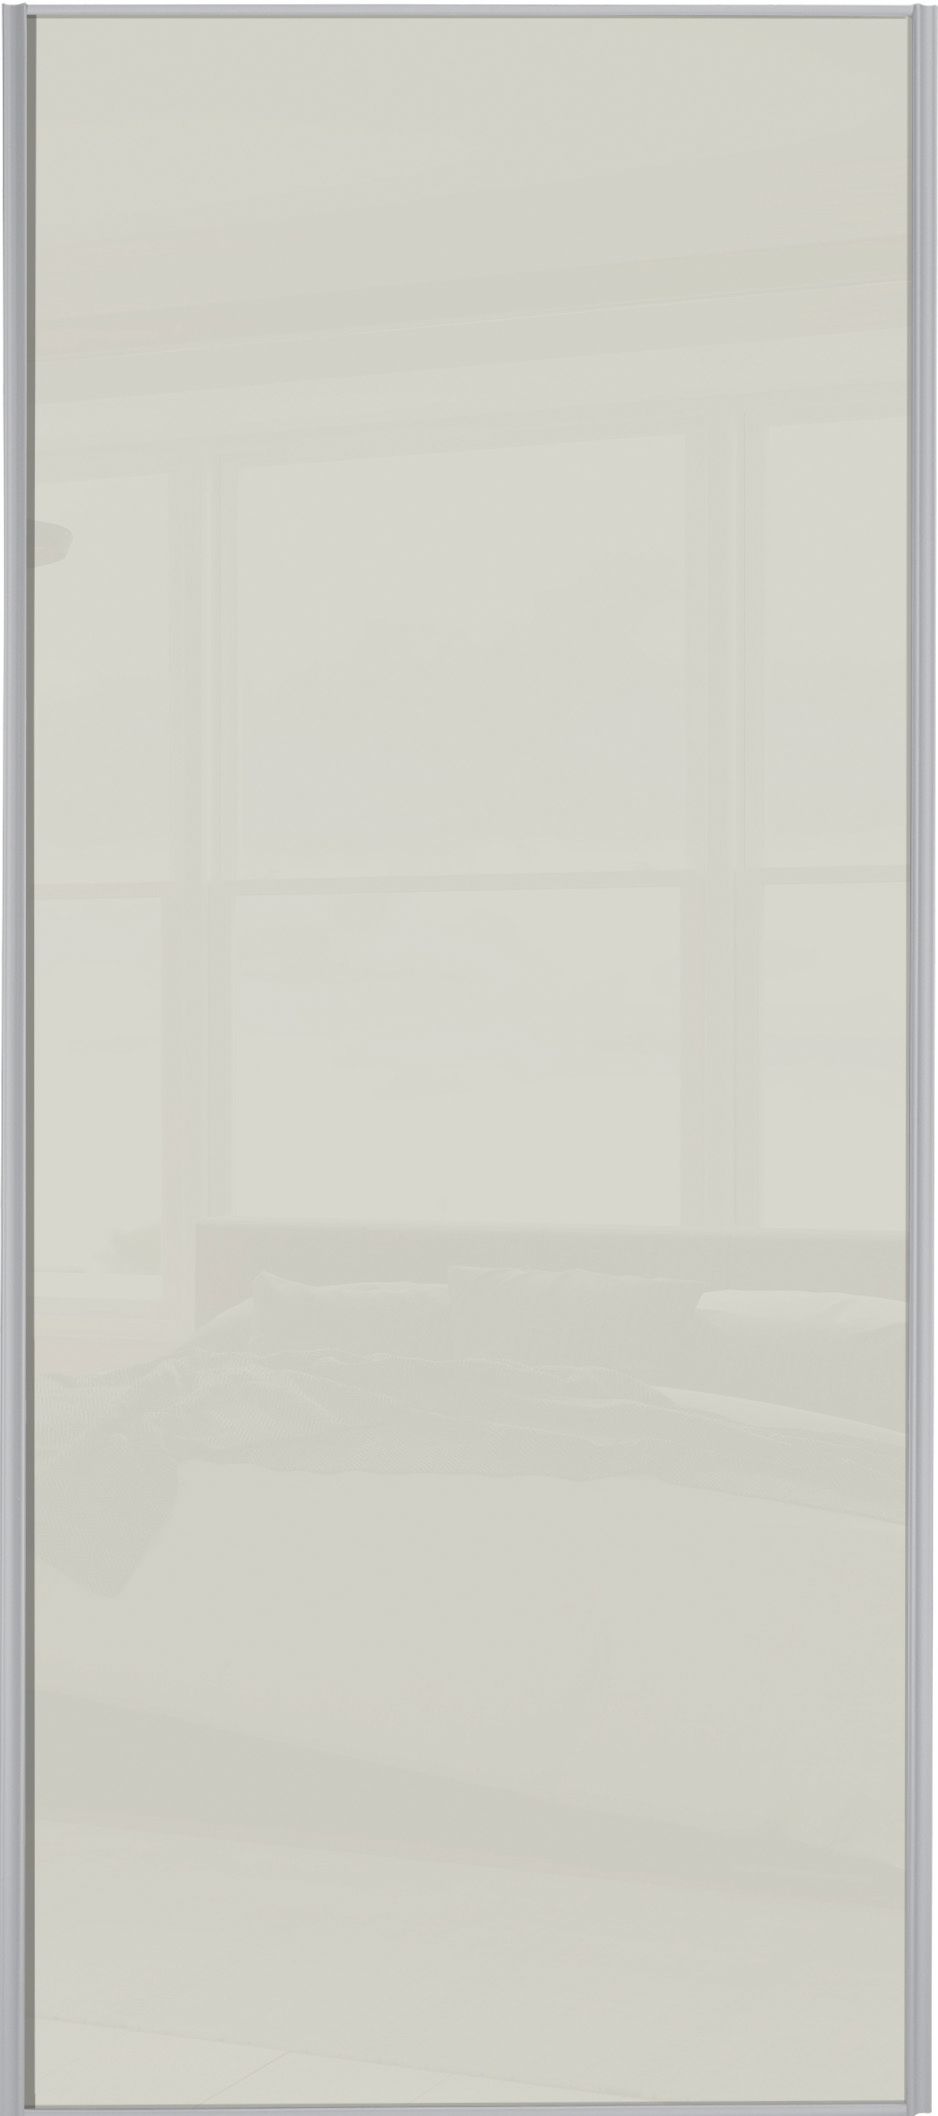 Image of Spacepro Sliding Wardrobe Door Silver Framed Single Panel Arctic White Glass - 2220 x 610mm